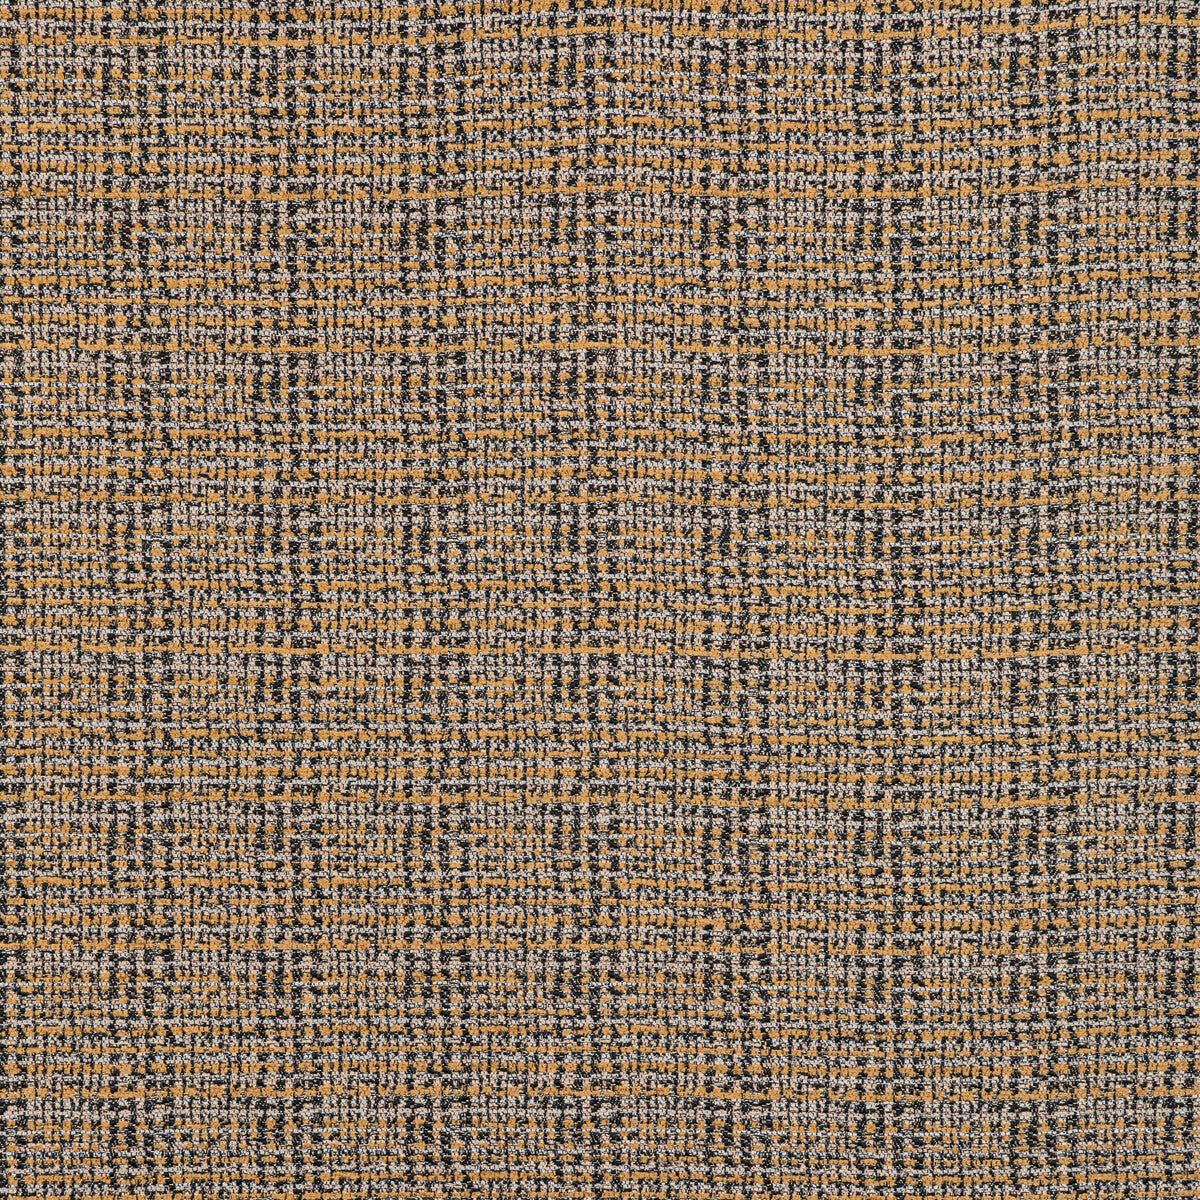 Ferla fabric in glint color - pattern 36313.816.0 - by Kravet Contract